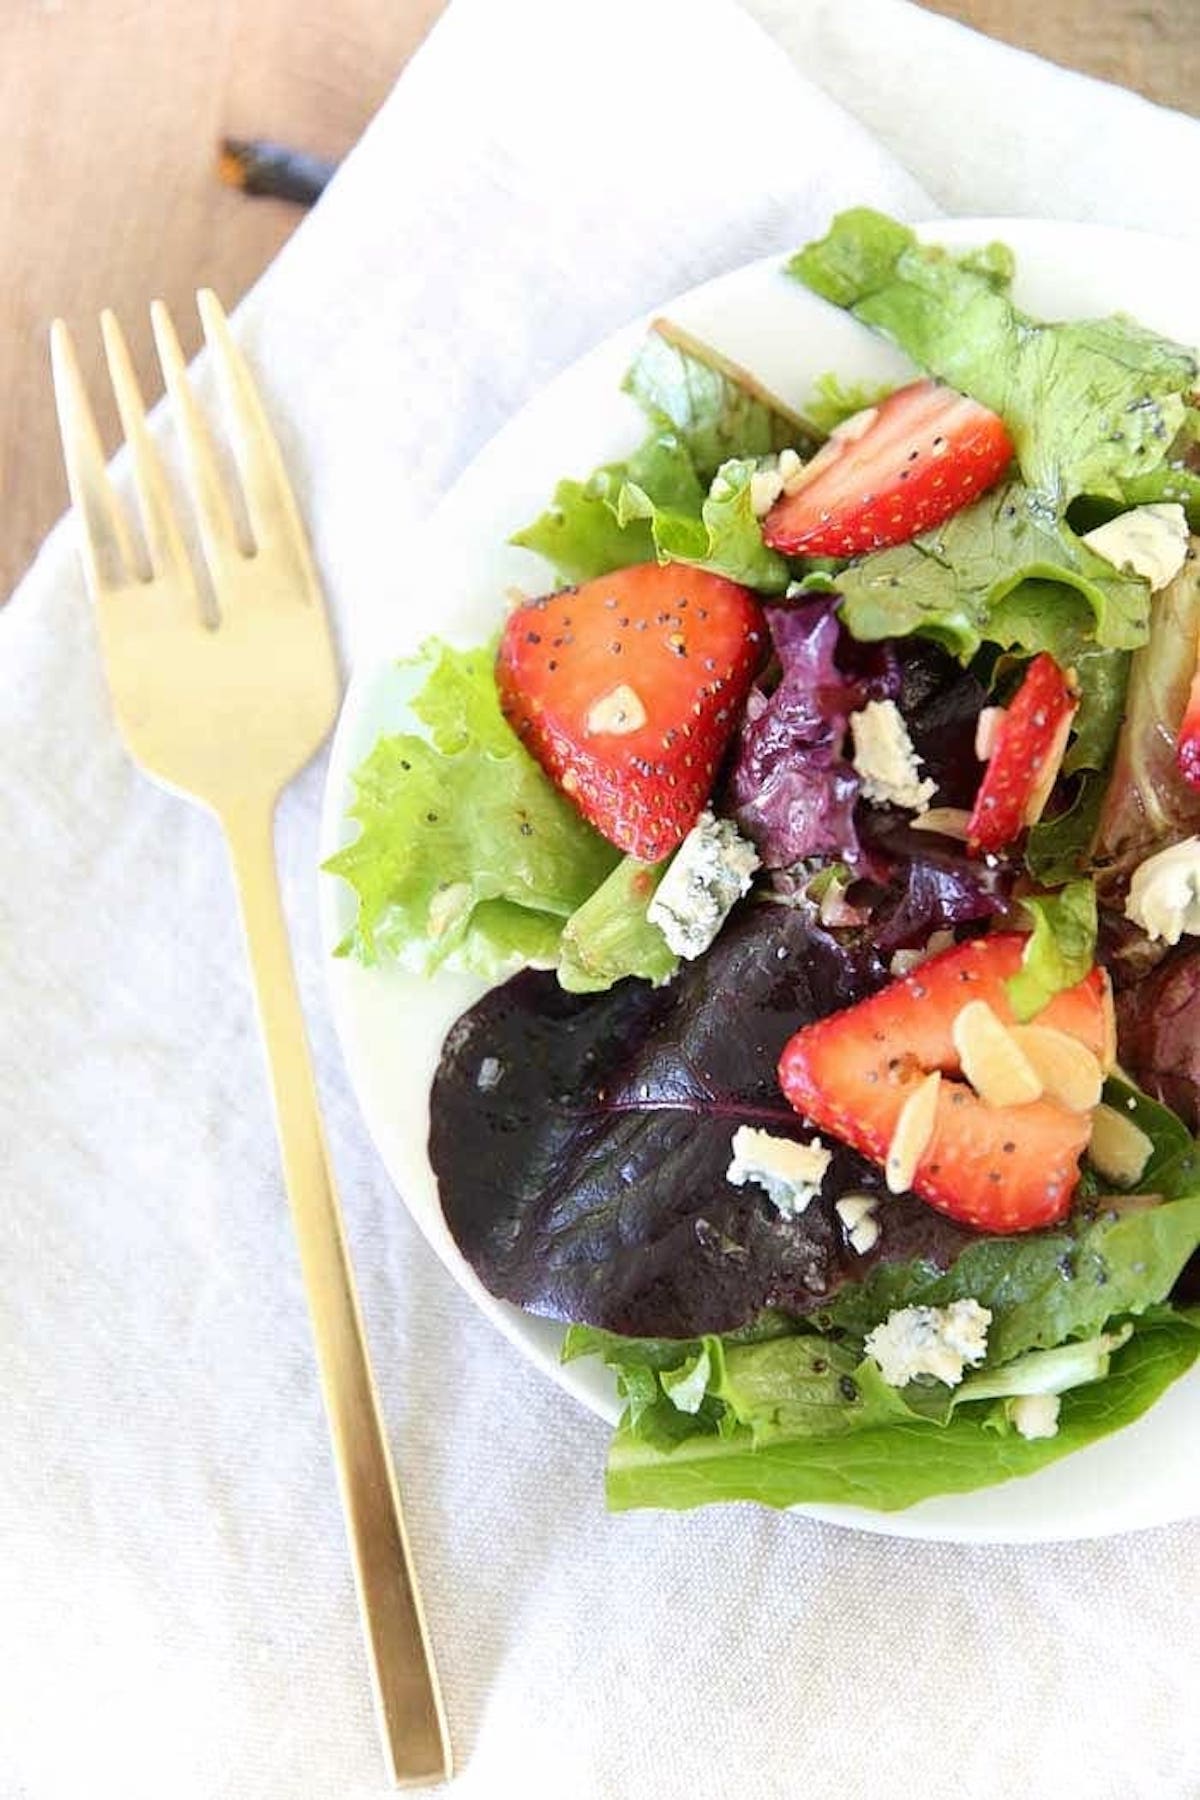 Strawberry salad with poppyseed vinaigrette